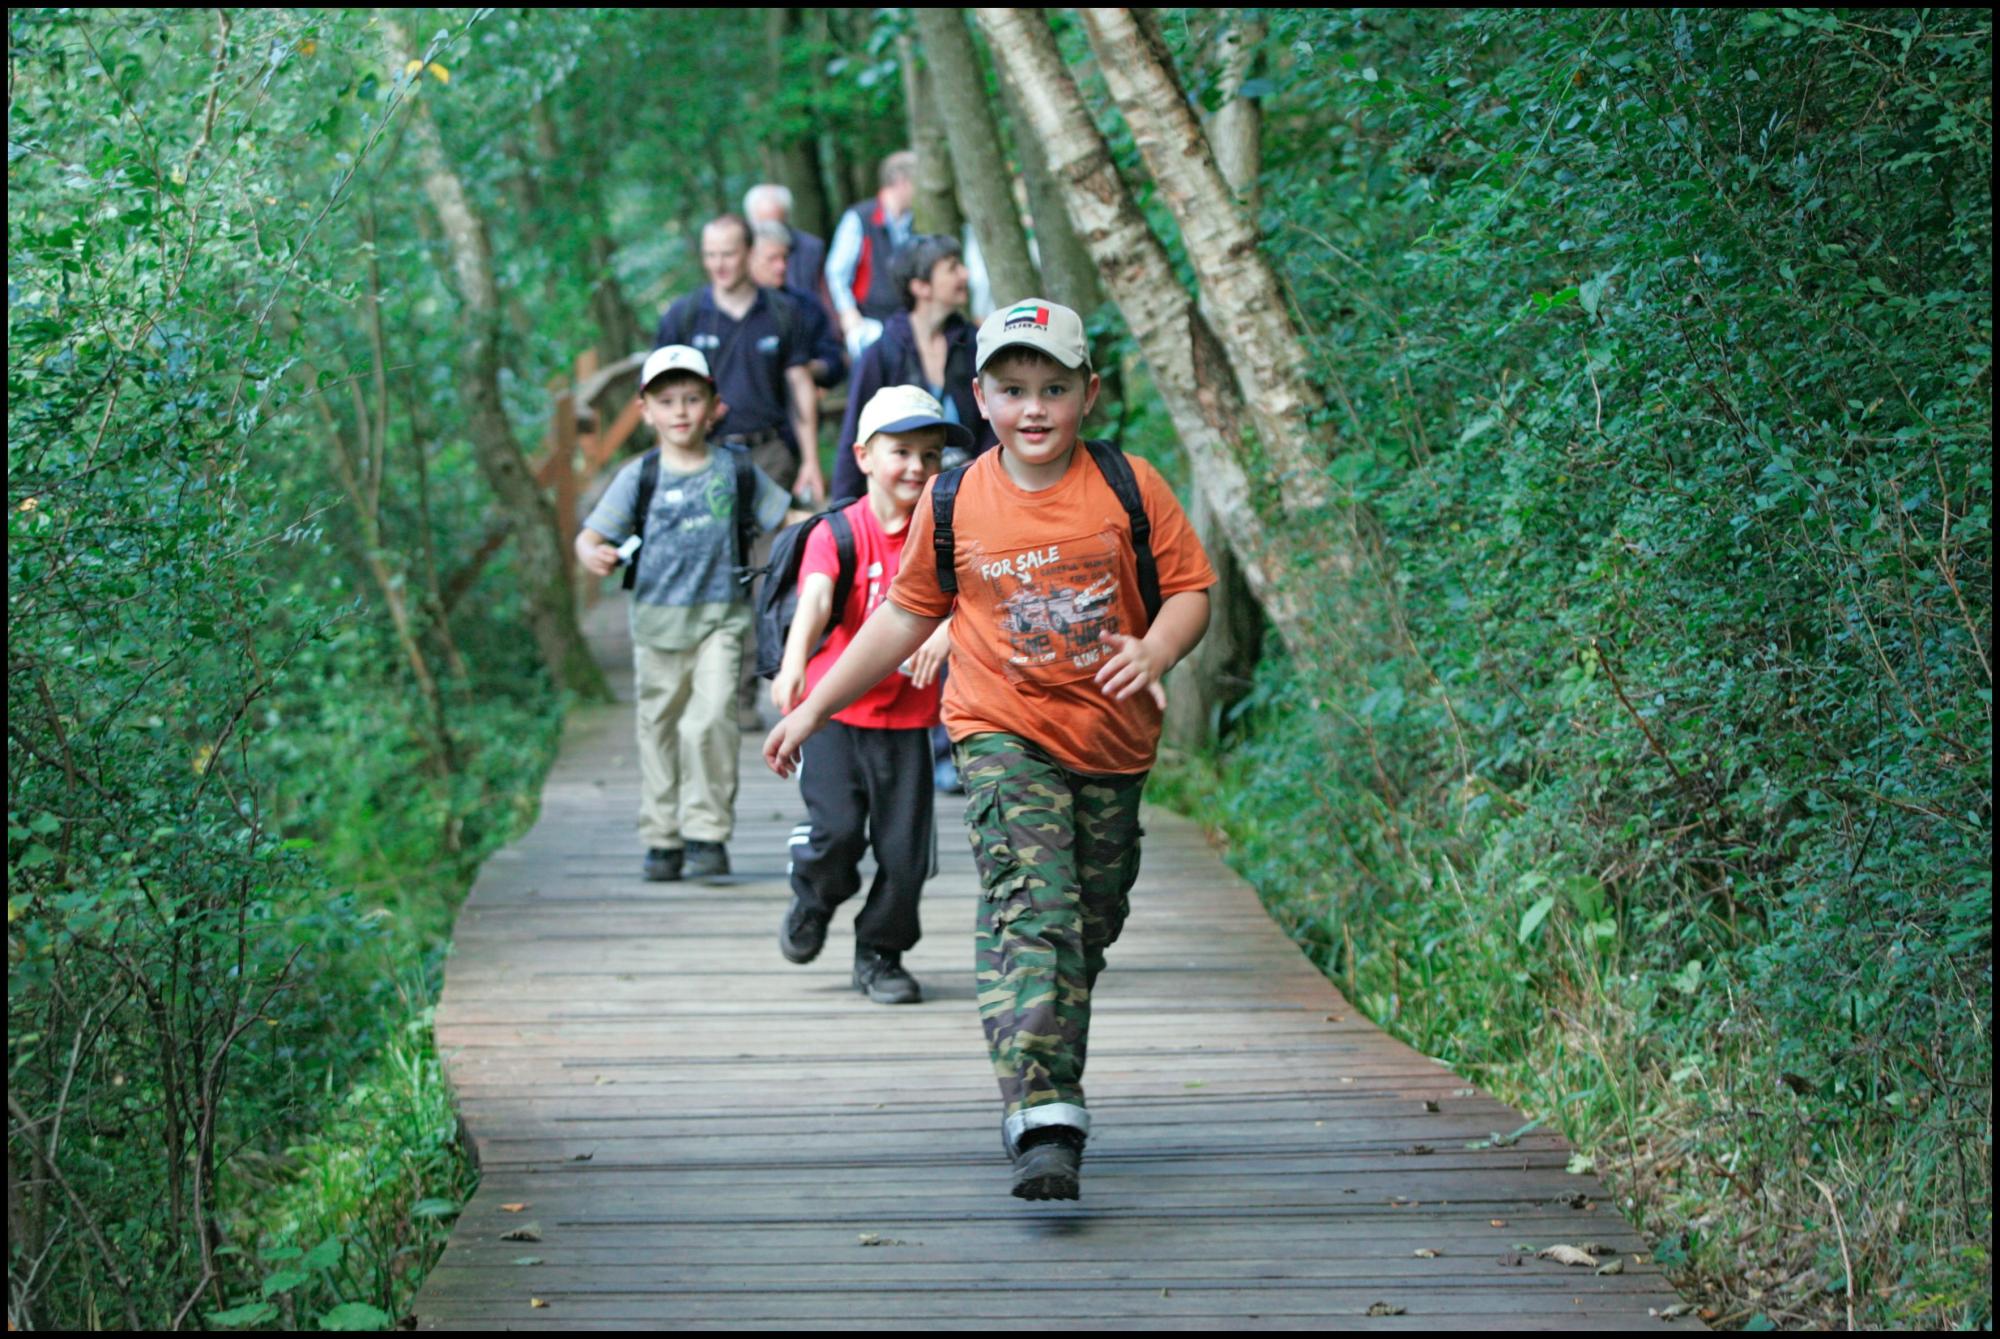 Children running over wooden walkway in forest. 